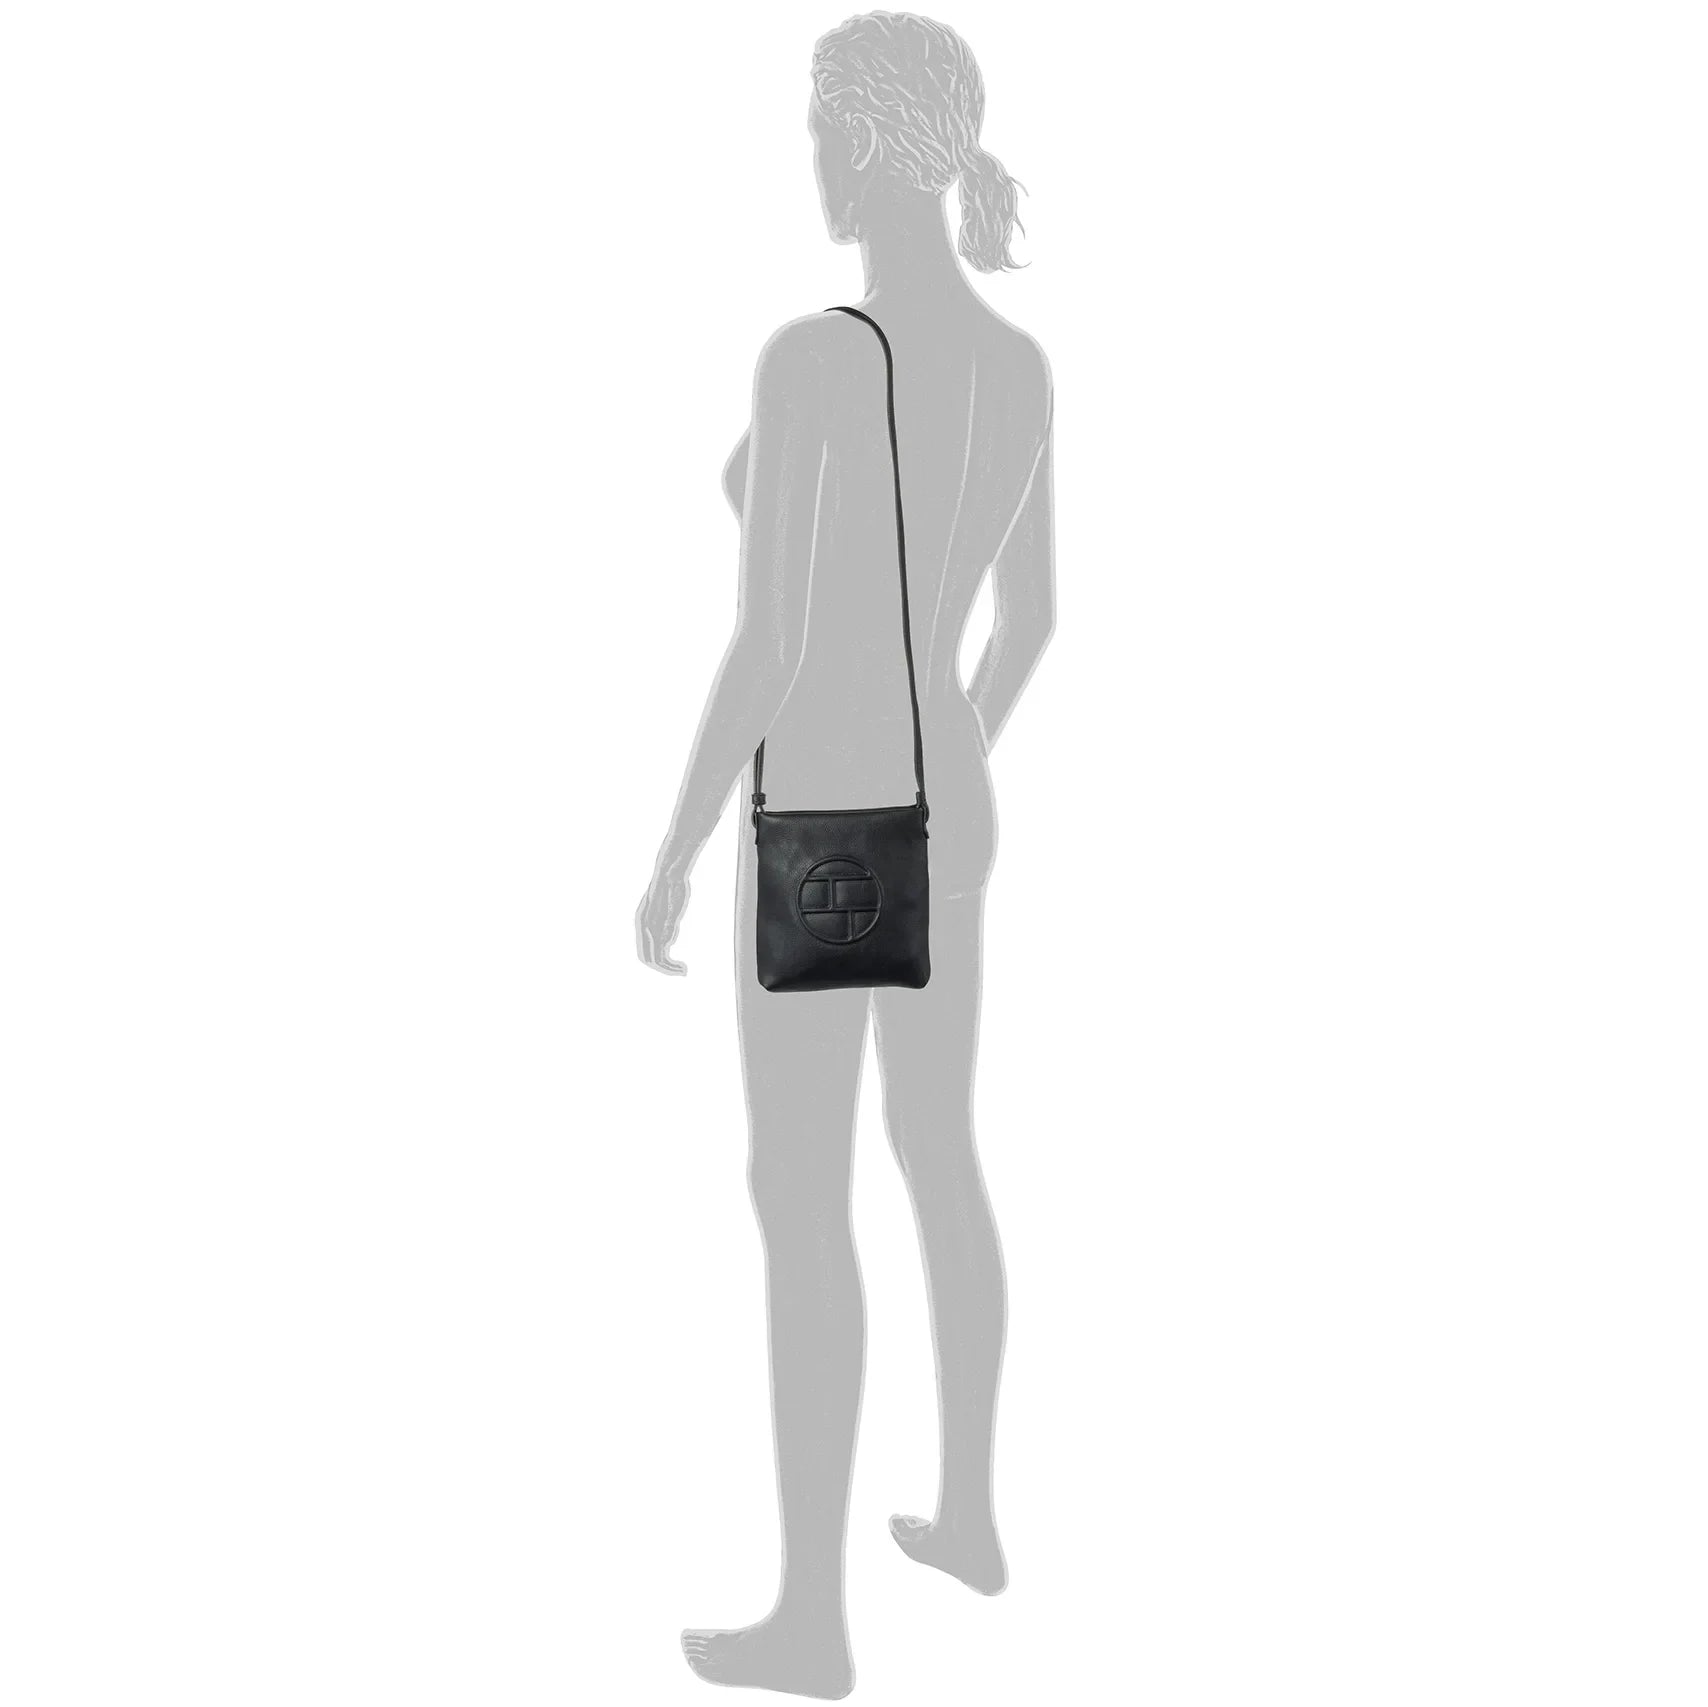 Tom Tailor Bags Rosabel Cross Bag 18 cm - black